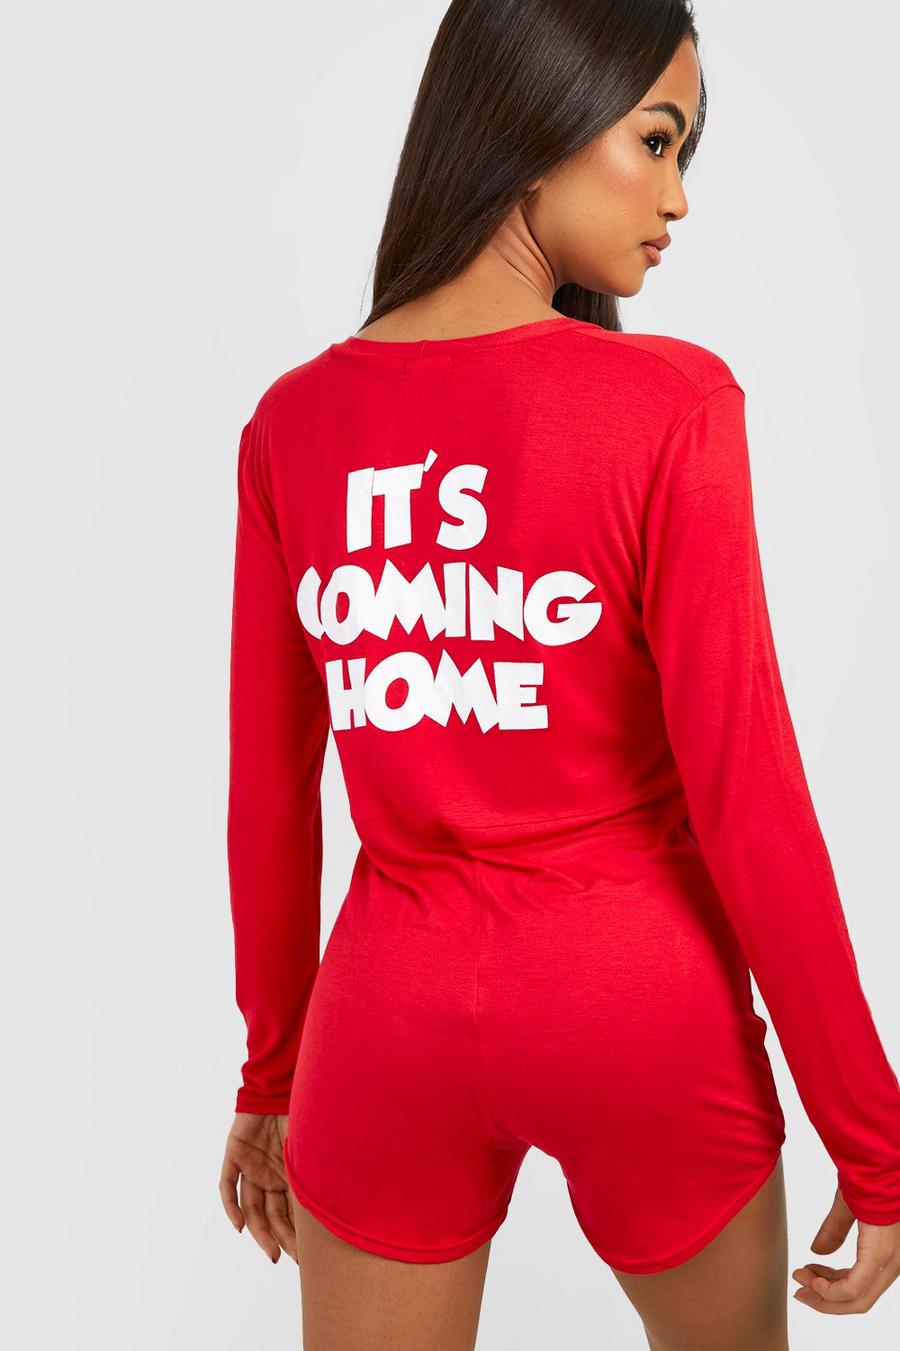 Combinaison à slogan It’s Coming Home, Red rouge